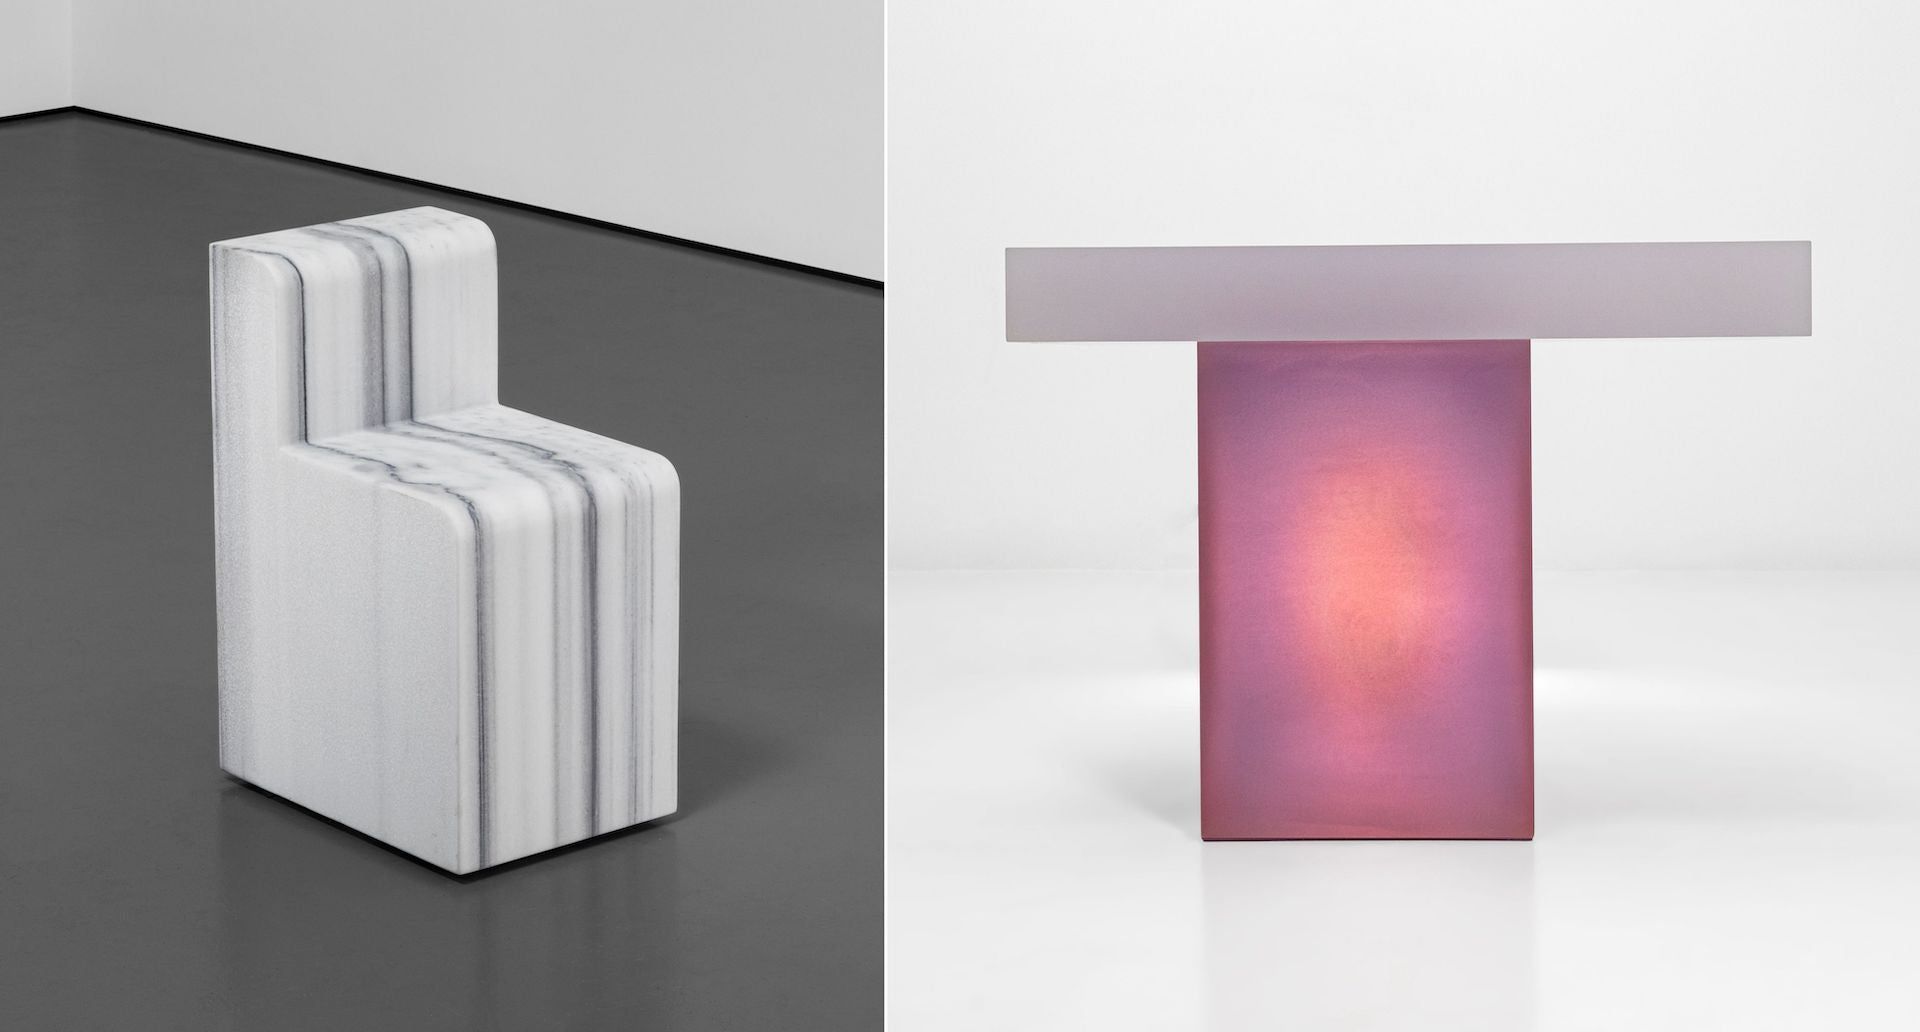 3DPD Stool by Robert Stadler (2022) and White & Light Purple Side Table by Wonmin Park (2016) for Carpenters Workshop Gallery. Photos © Carpenters Workshop Gallery